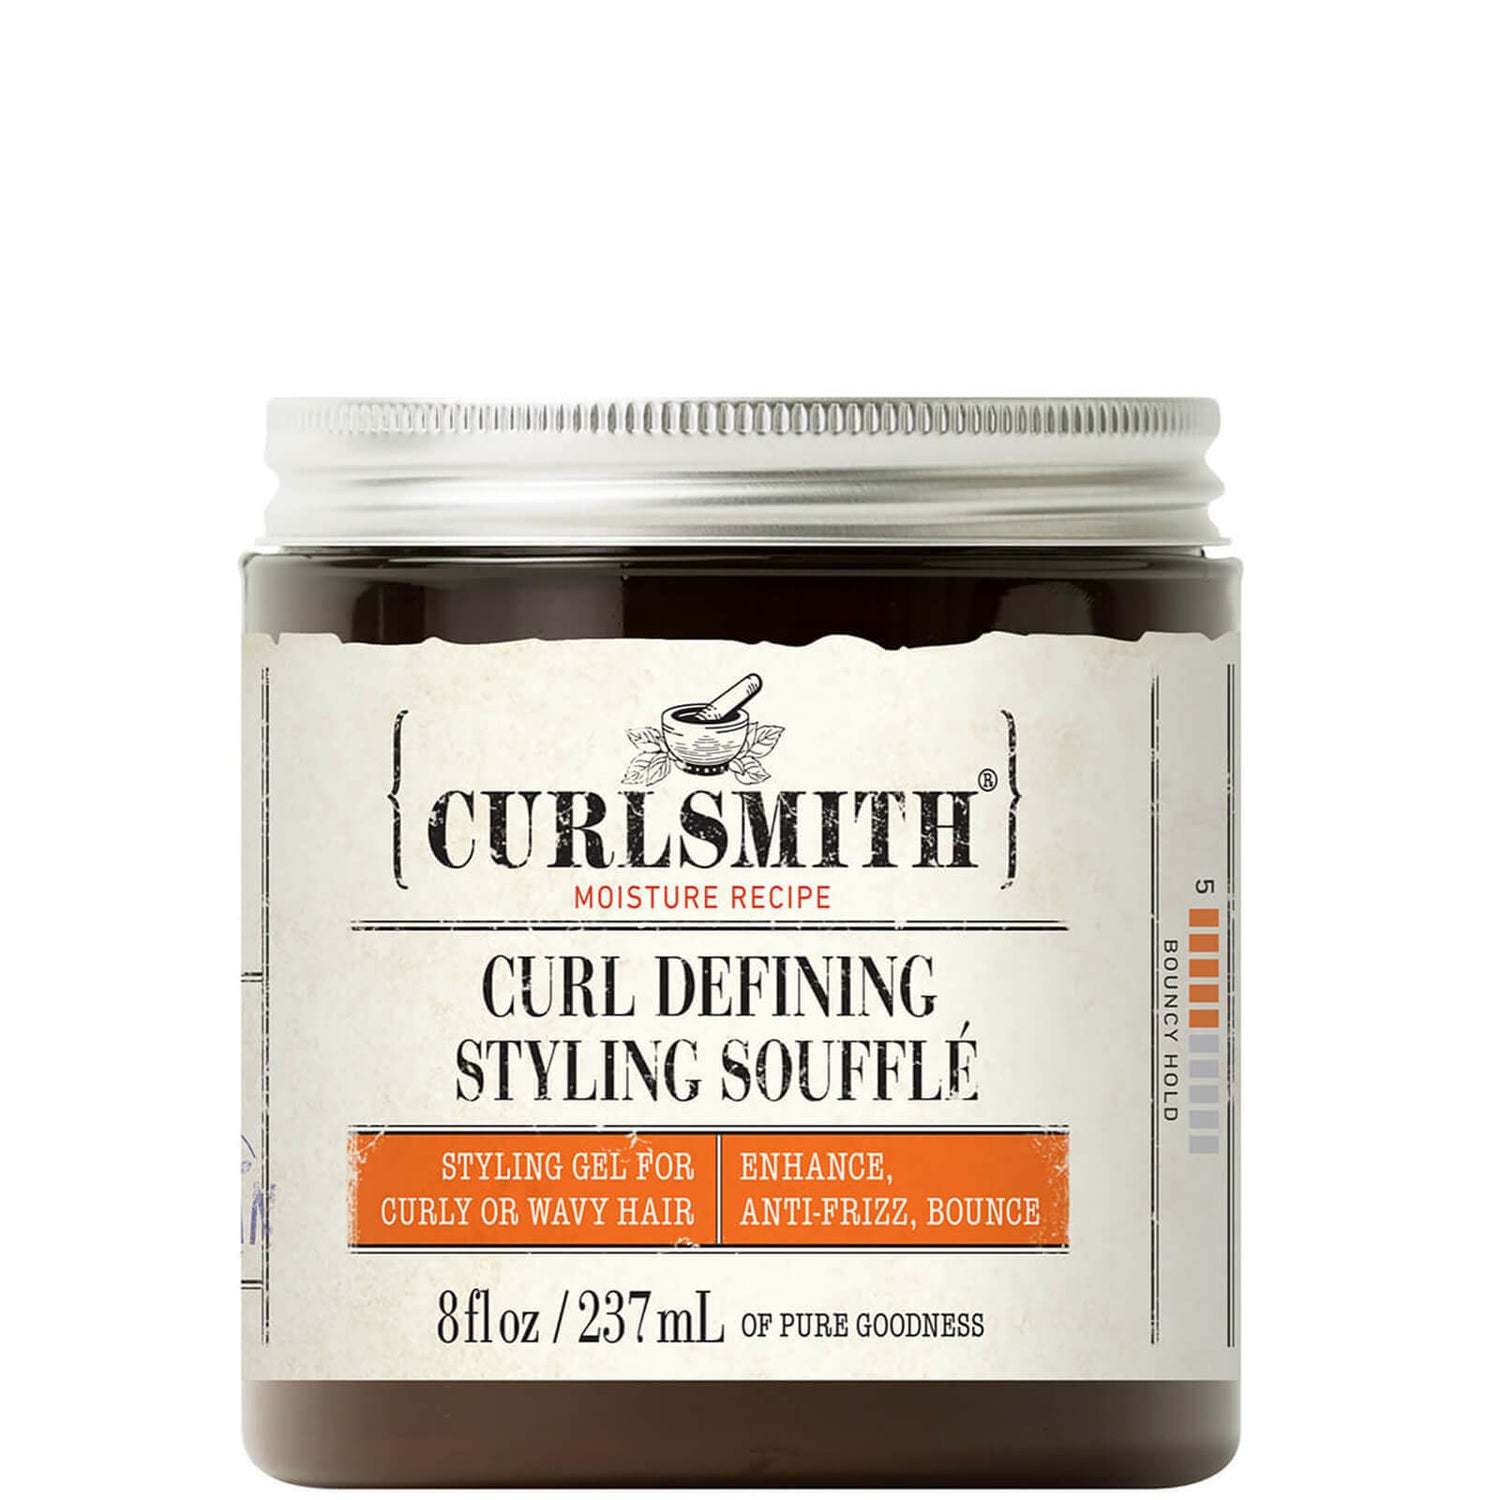 Curlsmith curl defining styling souffle dell latitude e6530